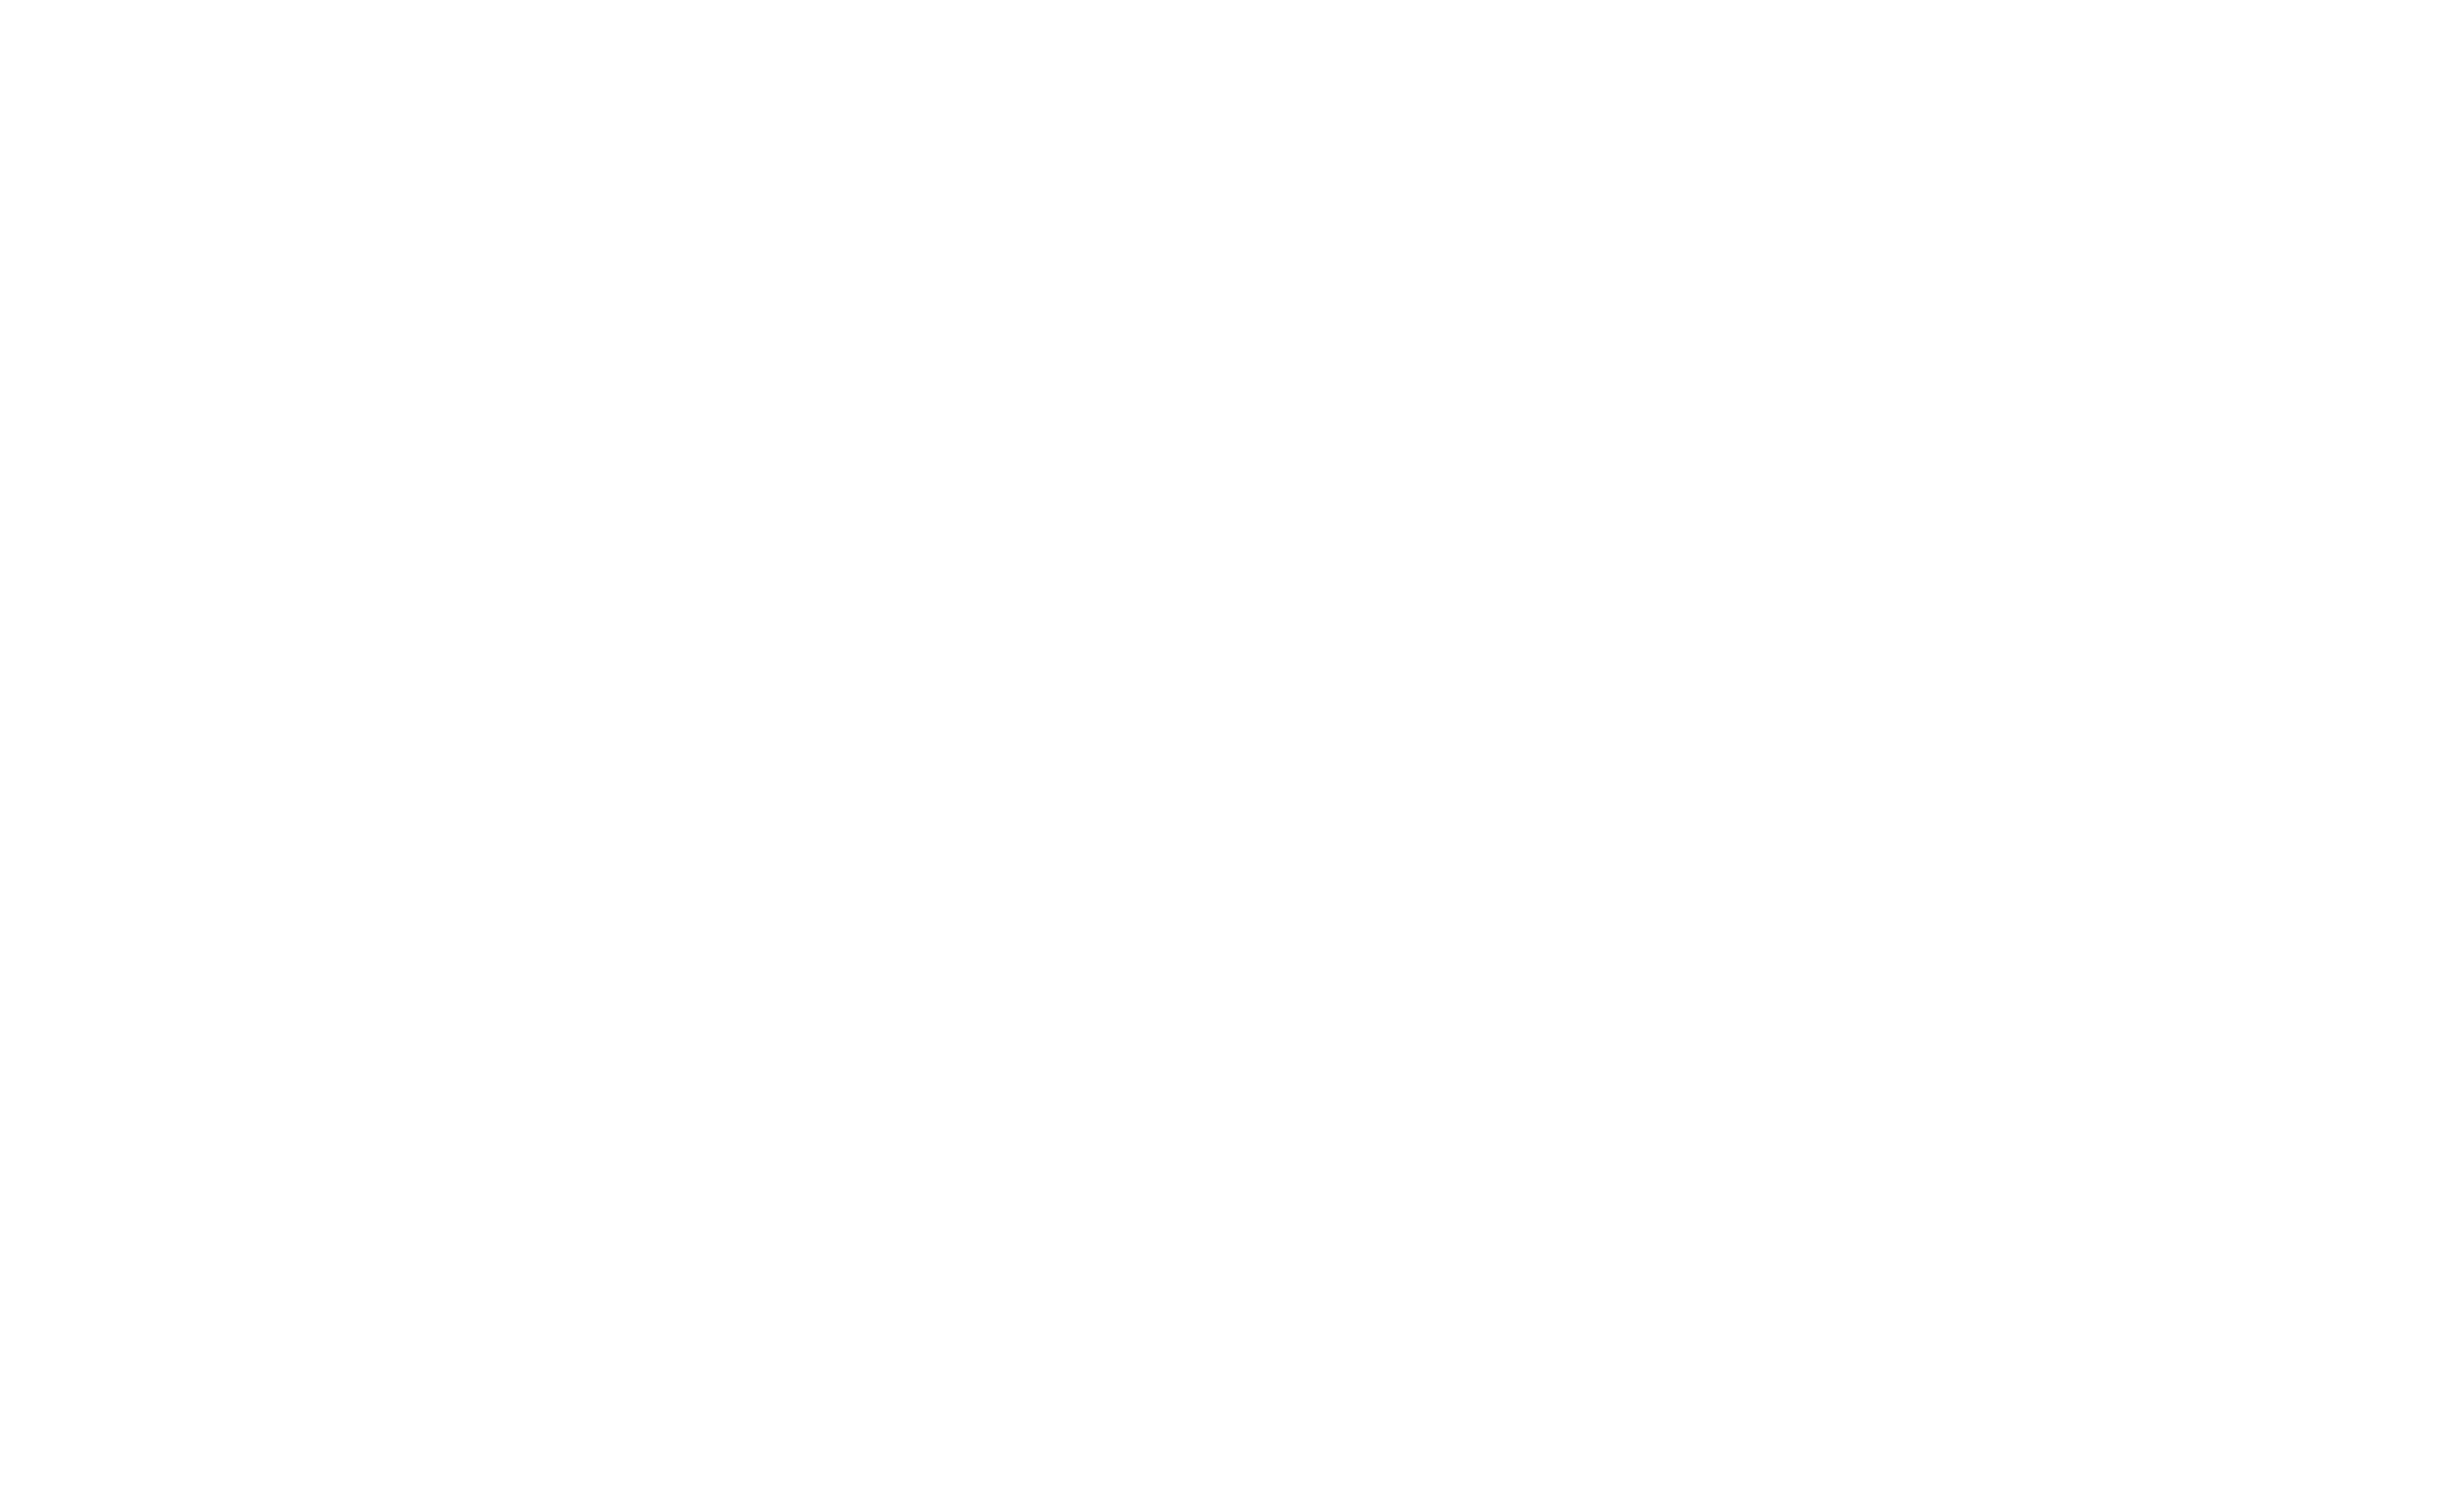 Fortune Global